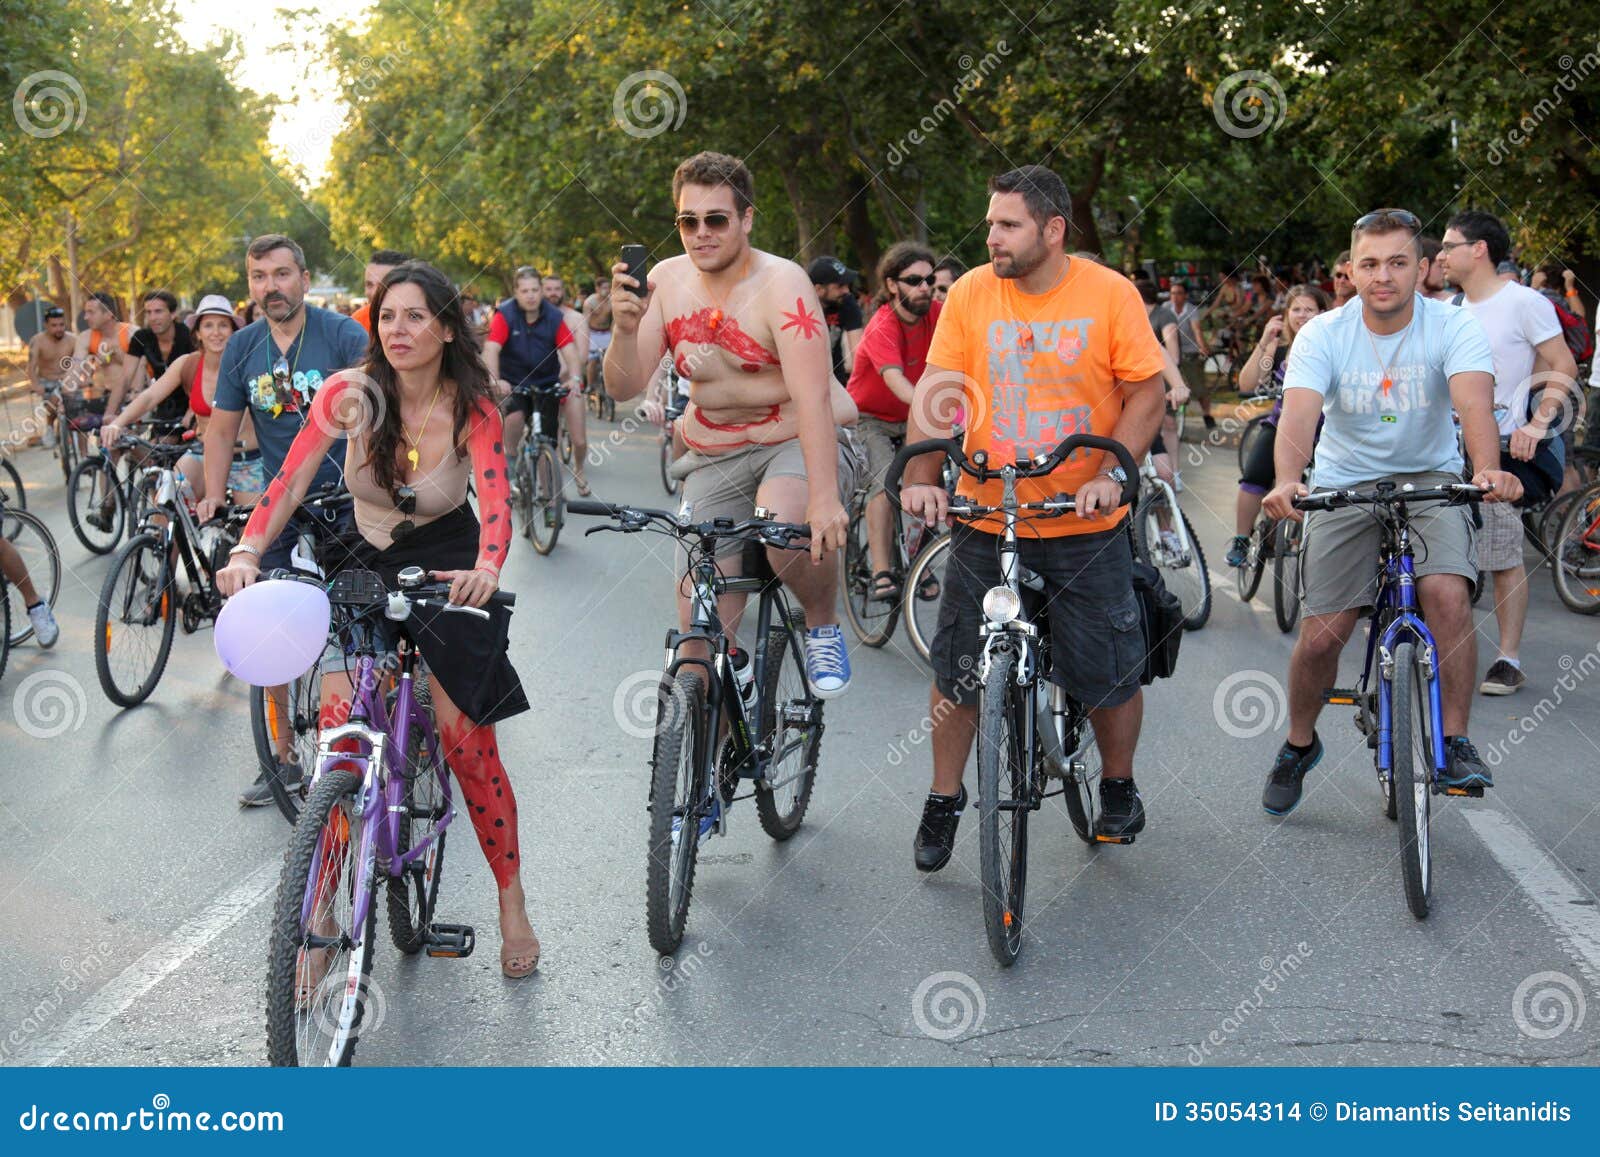 Naked Bicycle Race in Thessaloniki - NakeD Bicycle Race Thessaloniki Greece Jun Bicyclists Throng Start Annual ParaDe Jun ParaDe Celebrates 35054314